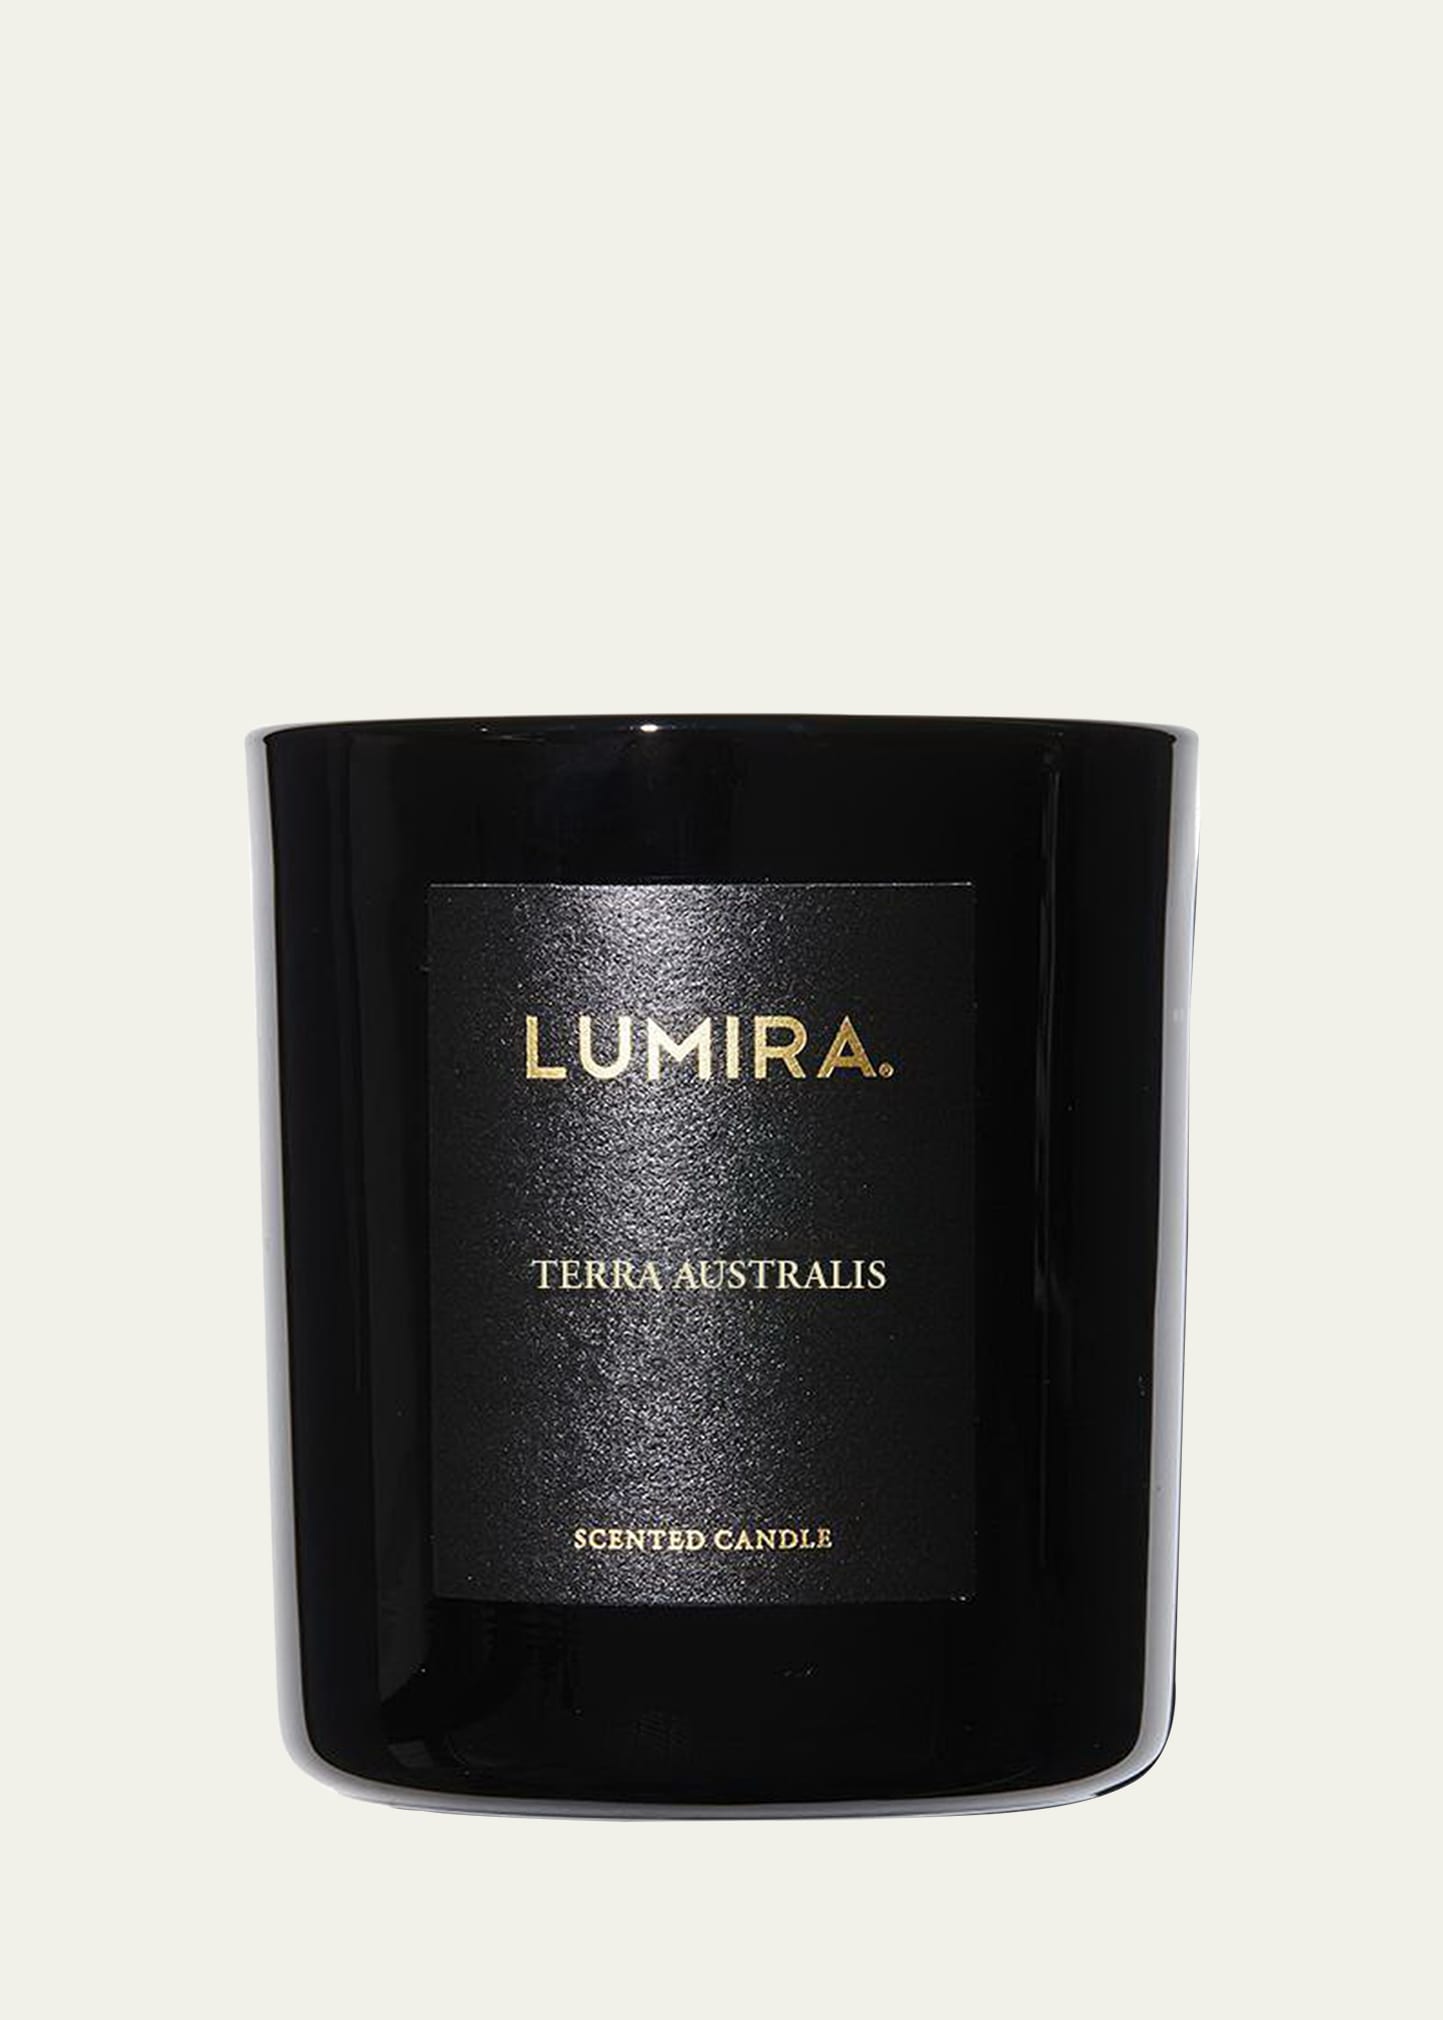 Lumira Terra Australis Candle, 10.5 Oz.